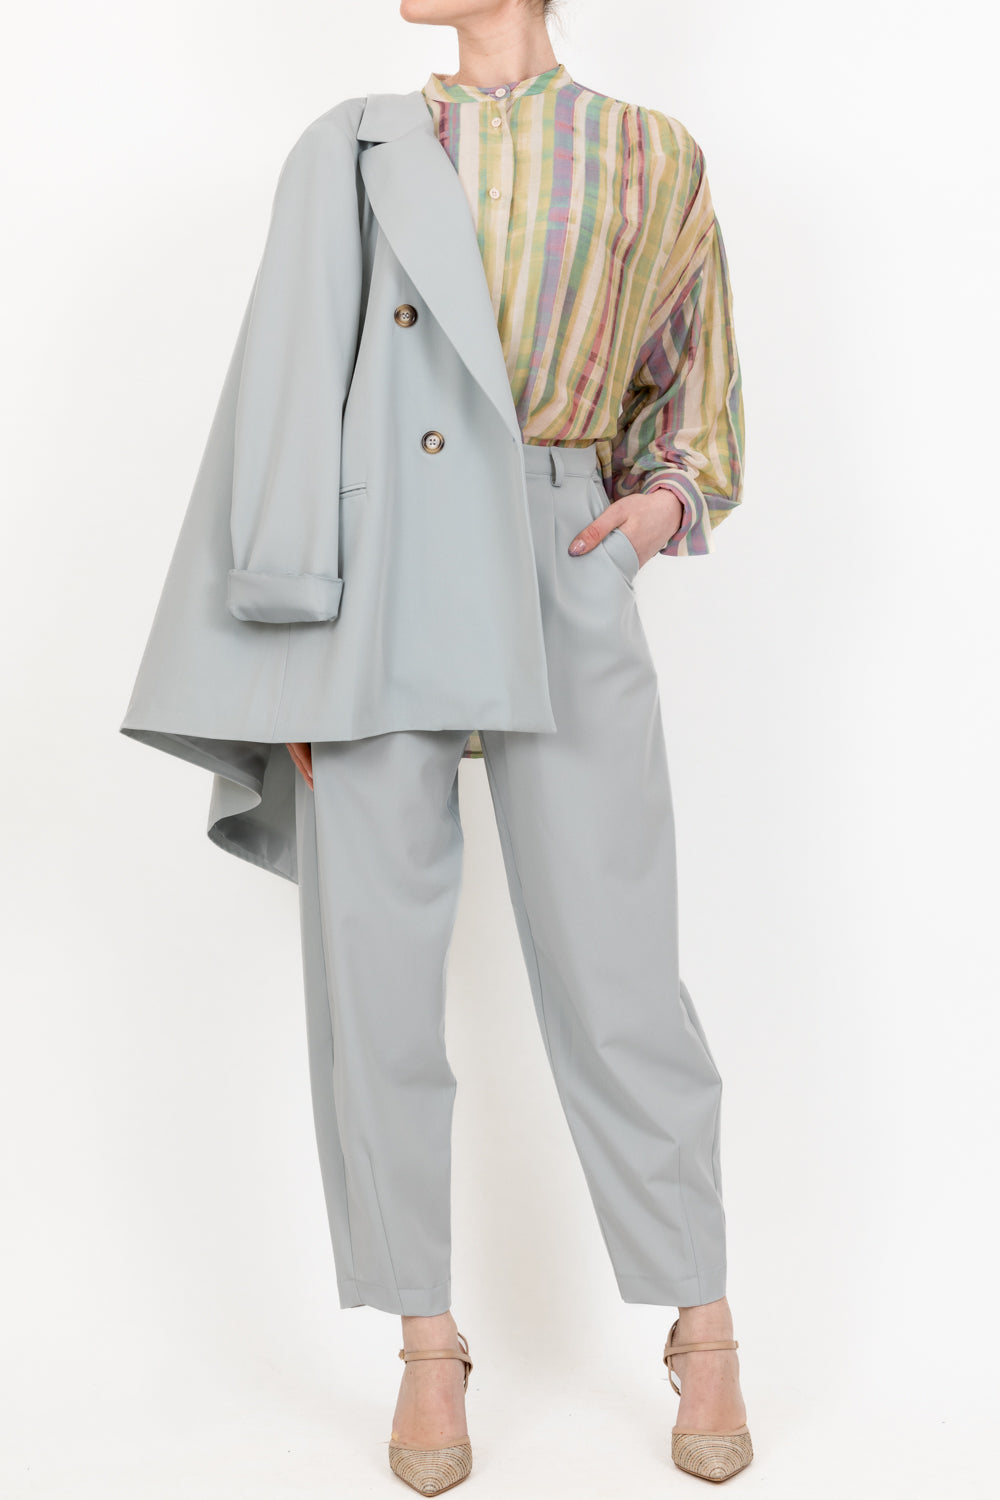 Dixie - Completo giacca doppiopetto pantalone carrot Art. J845J016 / P845J076